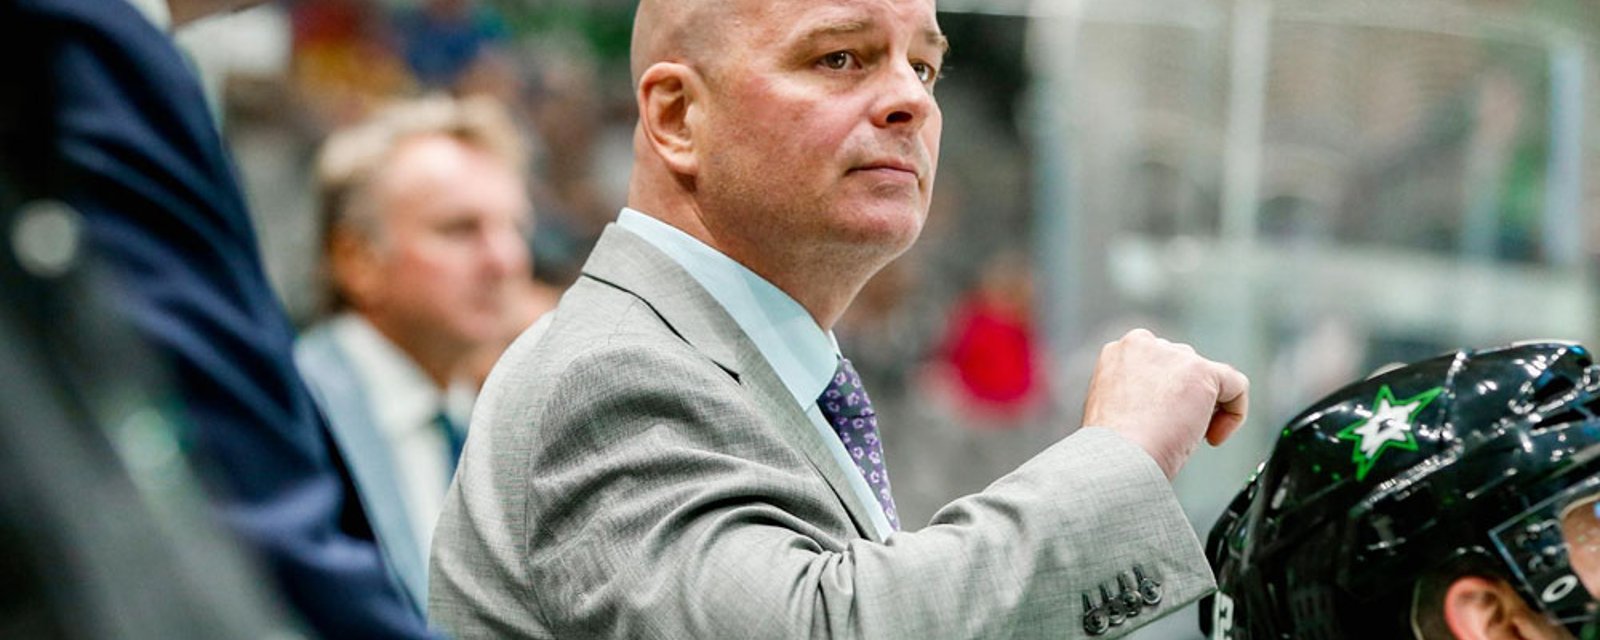 Stars fire coach Jim Montgomery over “unprofessional conduct”